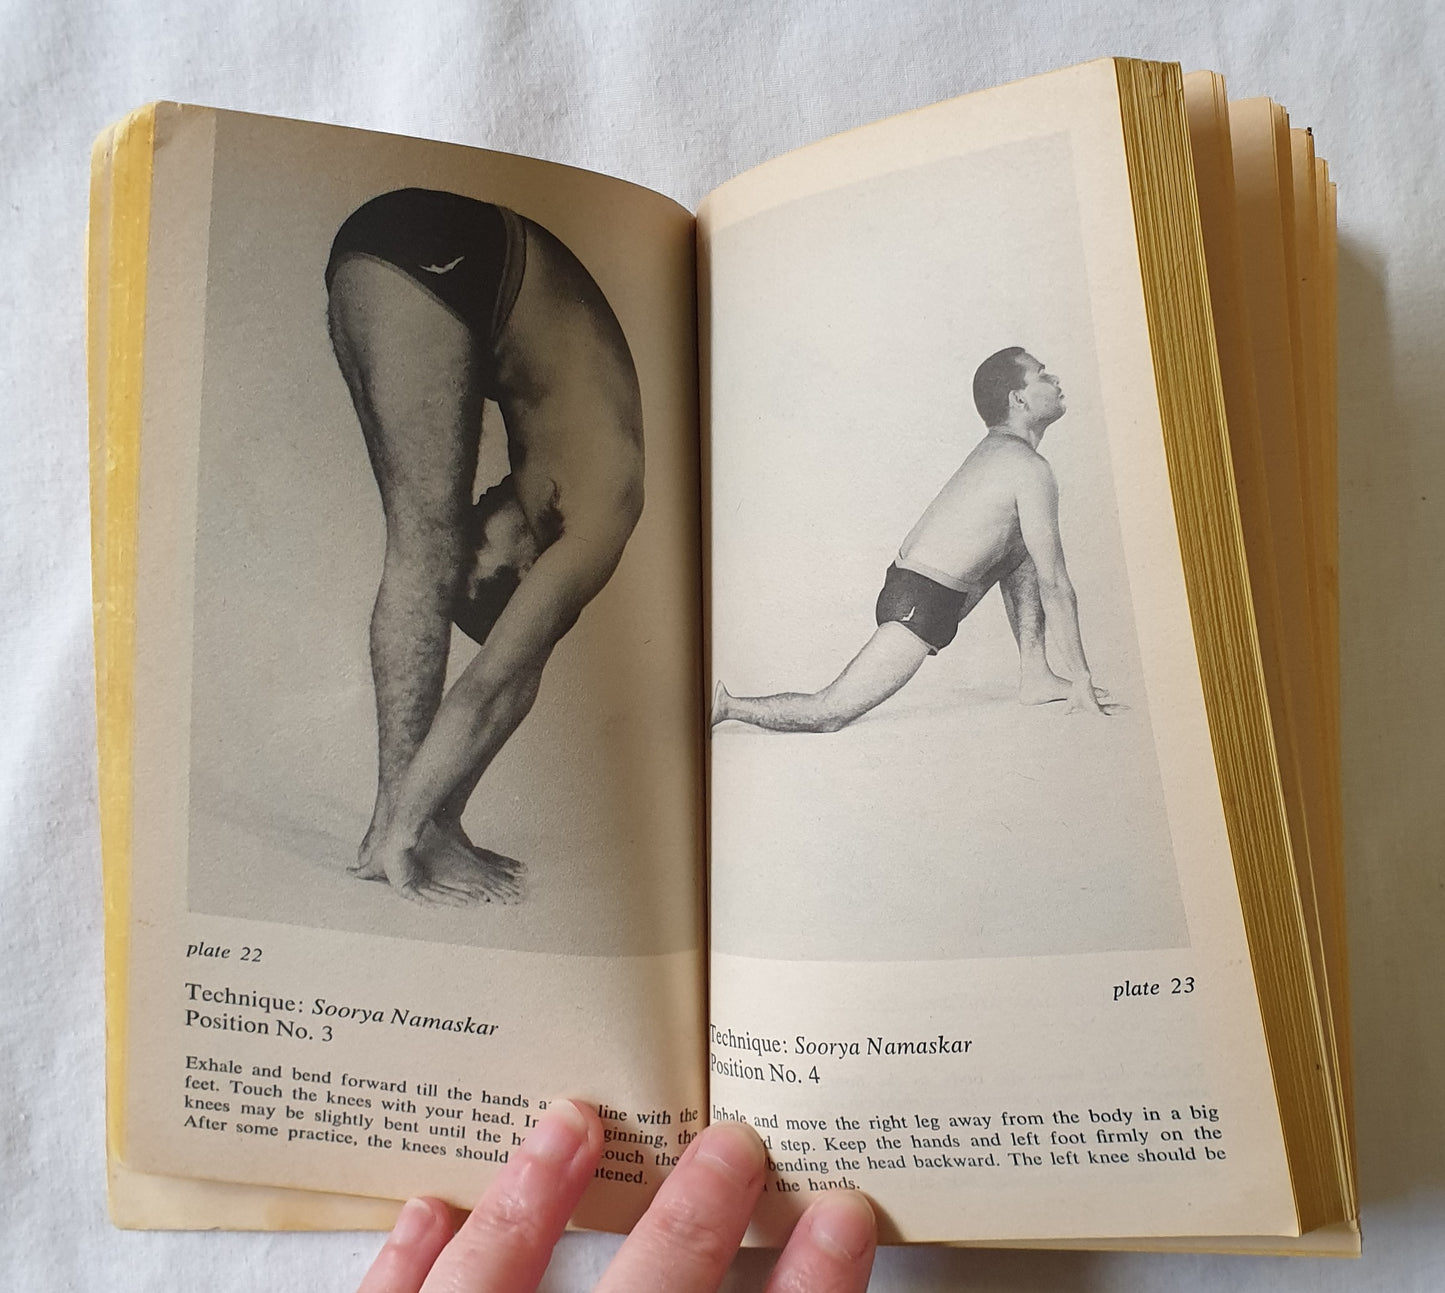 The Complete Illustrated Book of Yoga by Swami Vishnudevananda